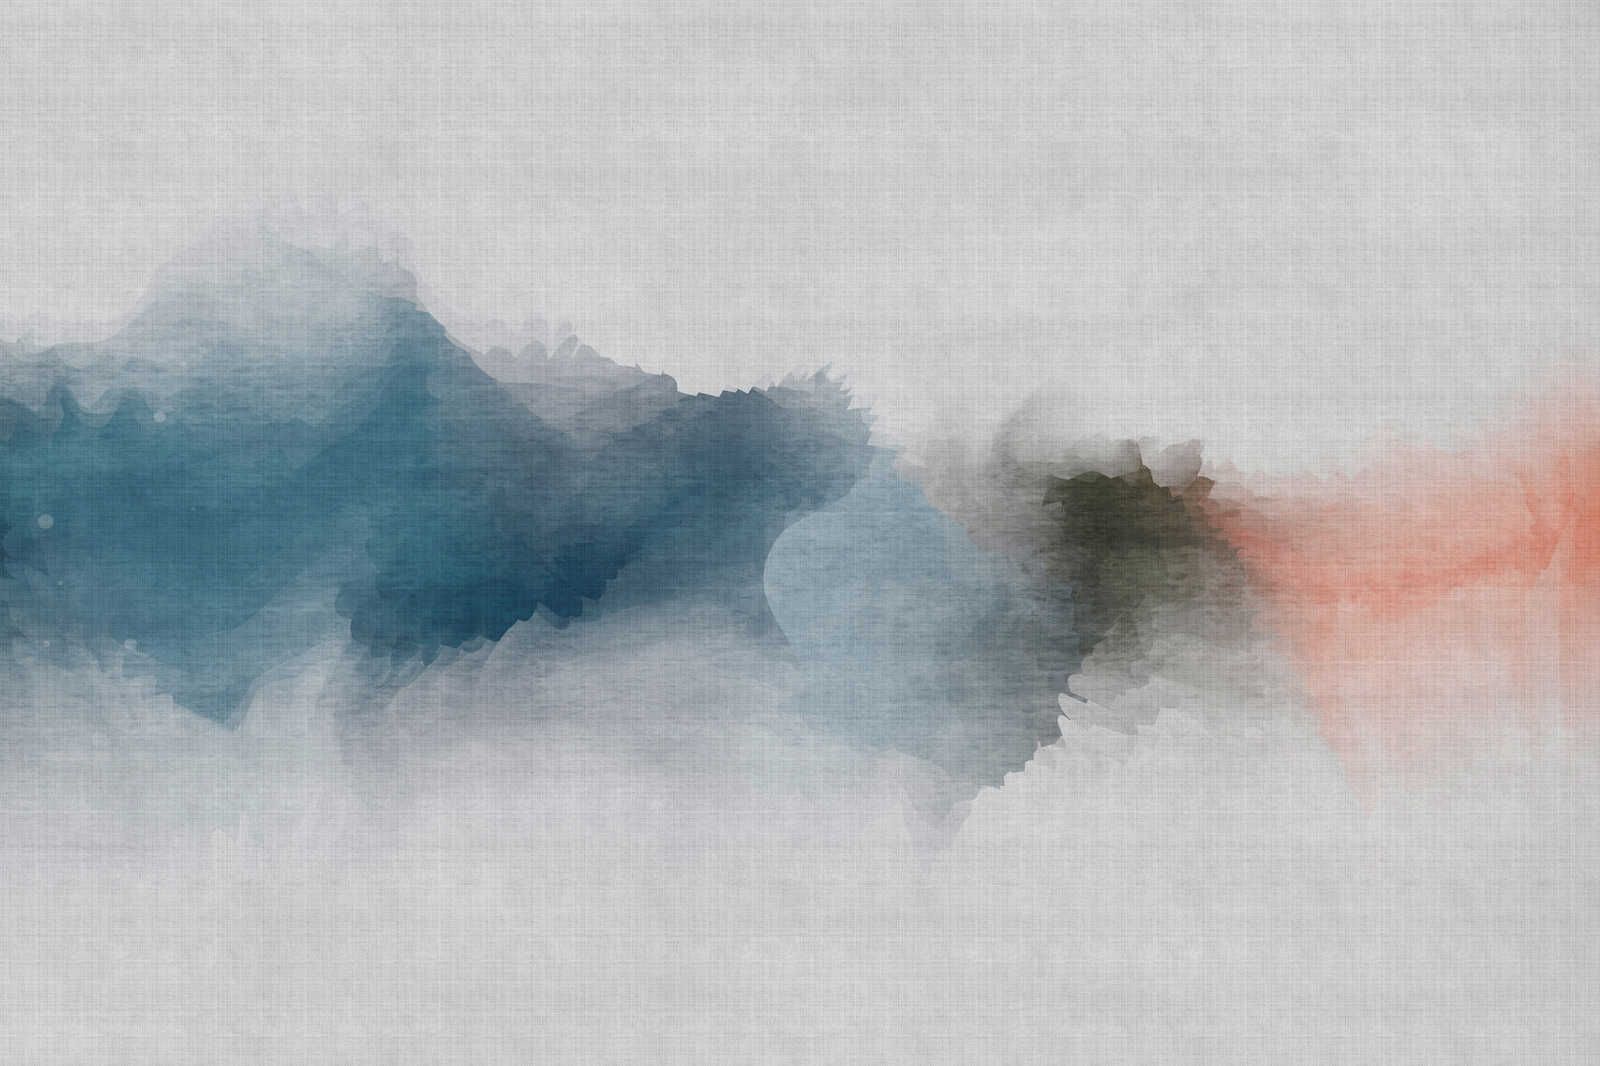             Daydream 1 - Minimalist watercolour style canvas print - natural linen look - 1.20 m x 0.80 m
        